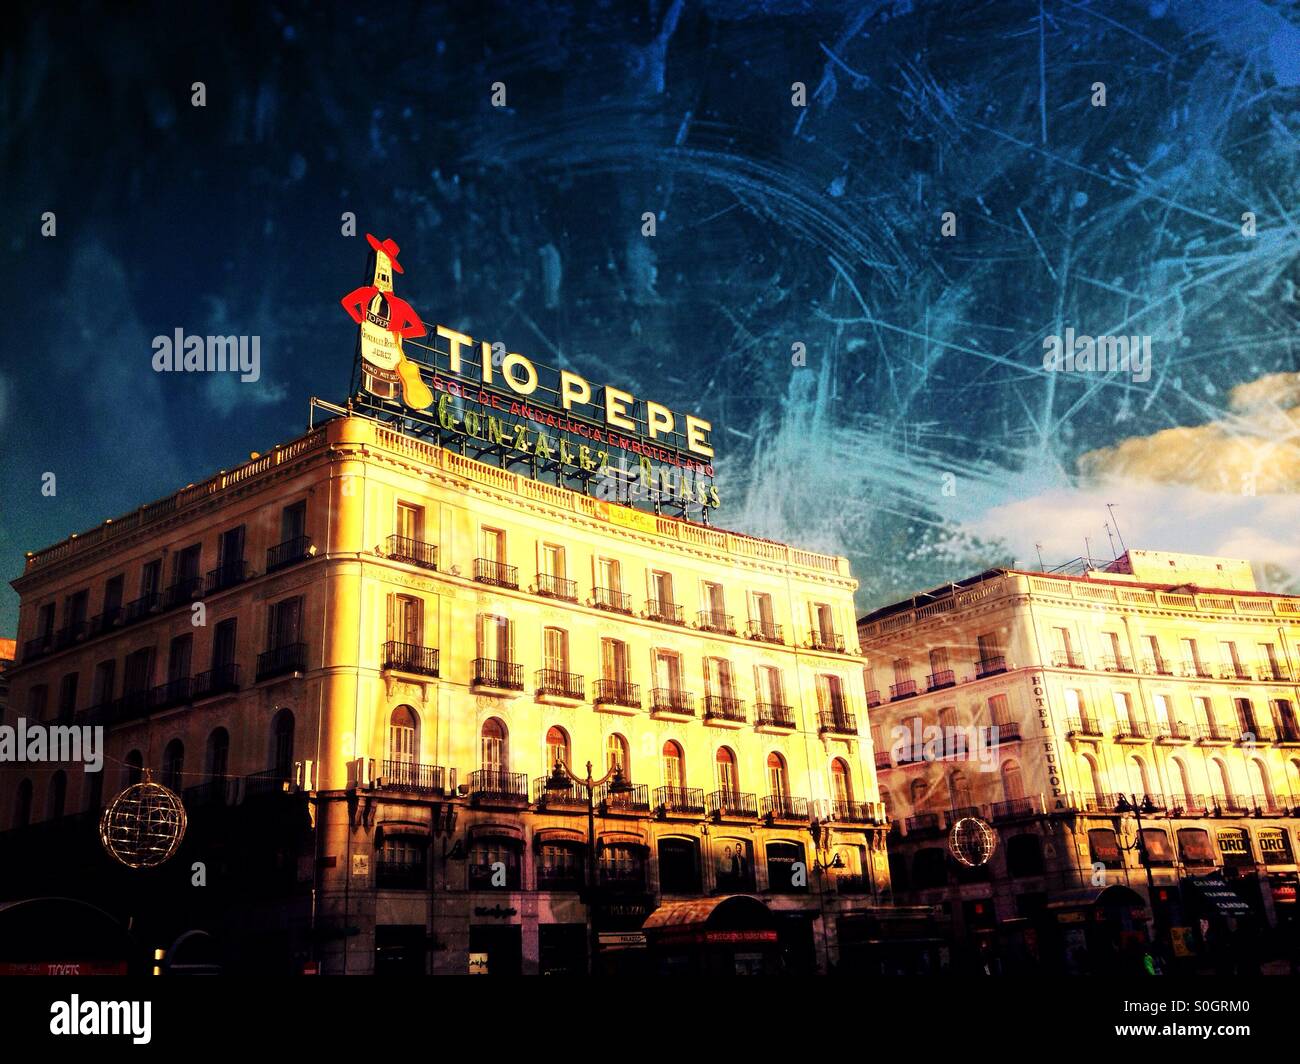 Tio Pepe building in Madrid, Spain Stock Photo